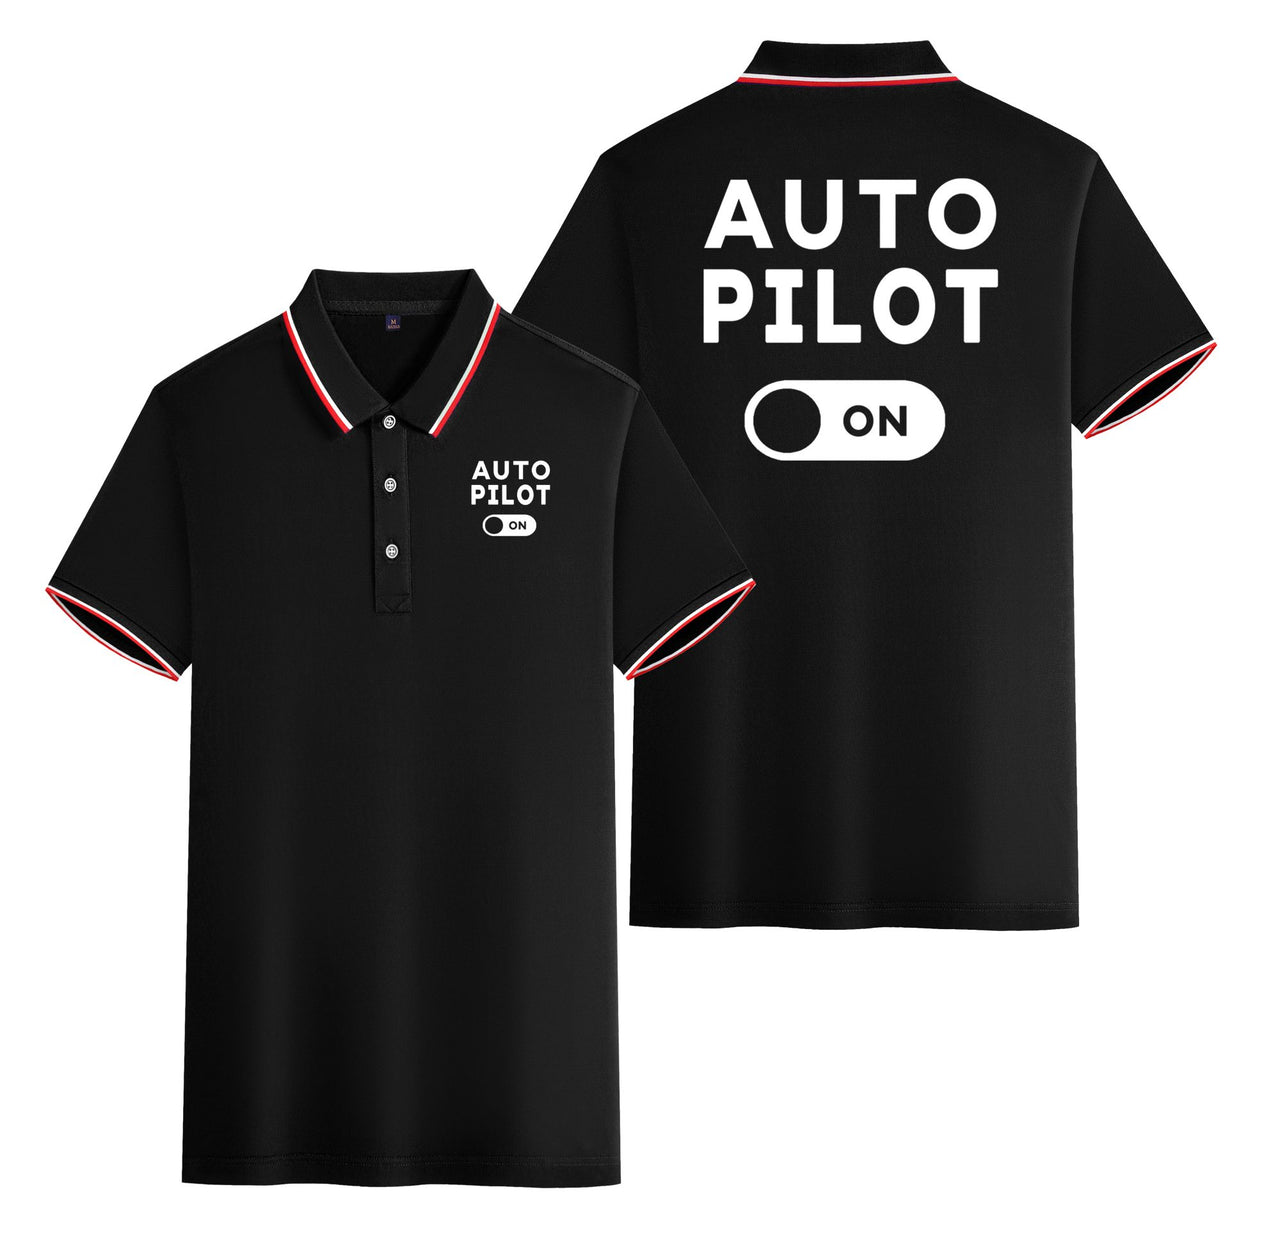 Auto Pilot ON Designed Stylish Polo T-Shirts (Double-Side)